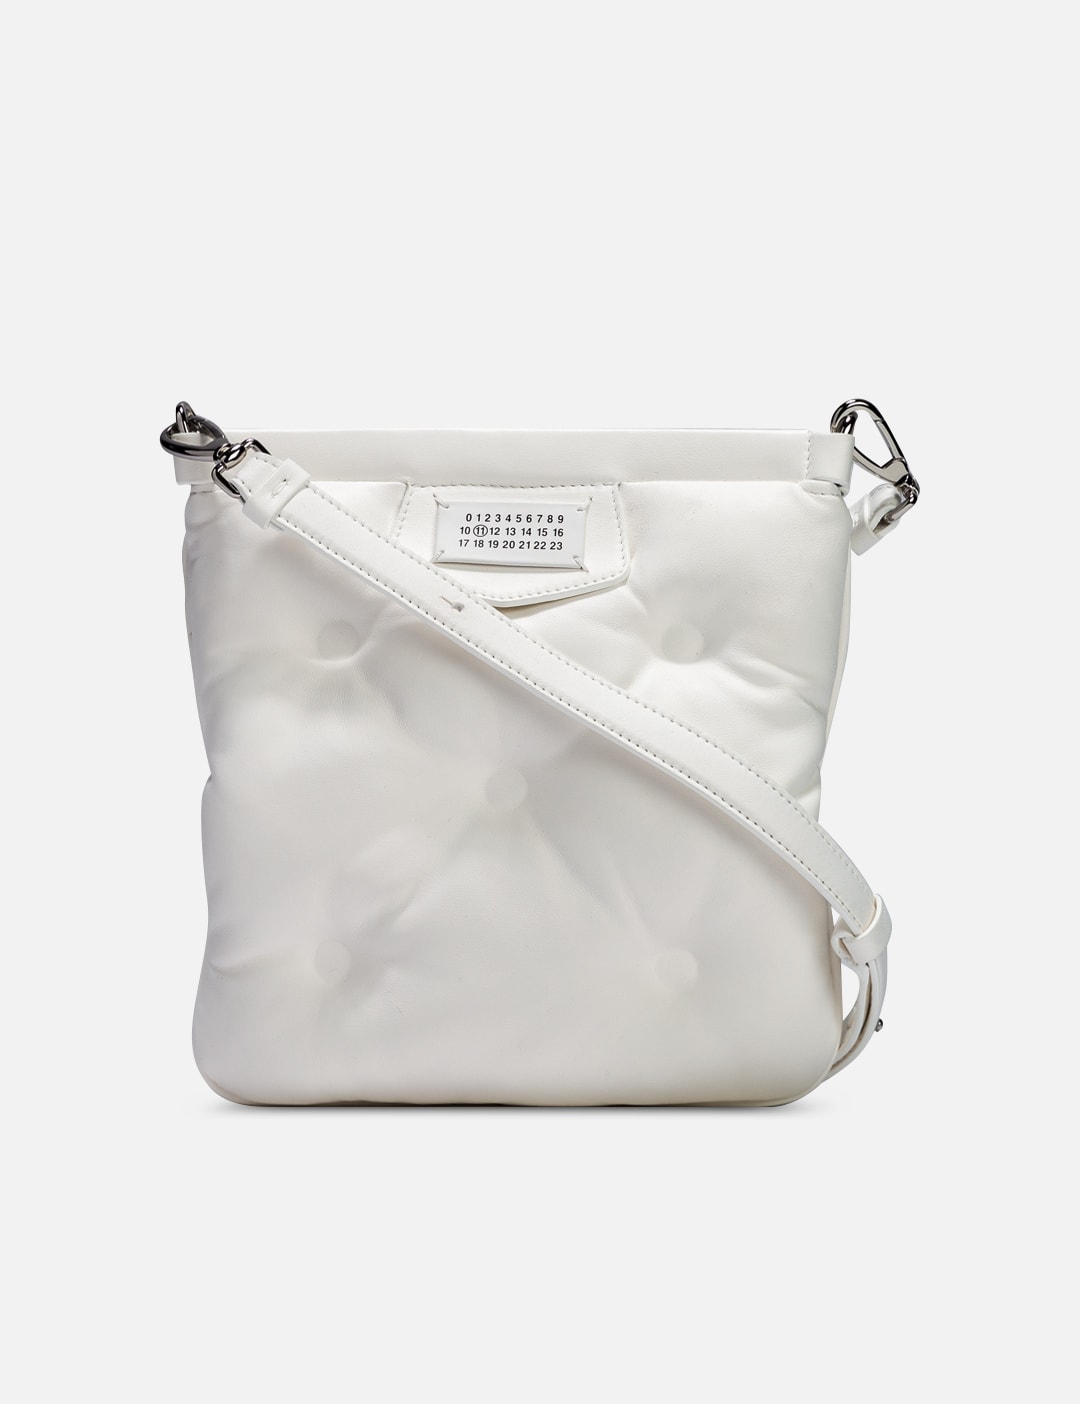 Maison Margiela Glam Slam Sport Flat Pocket Bag in Greige